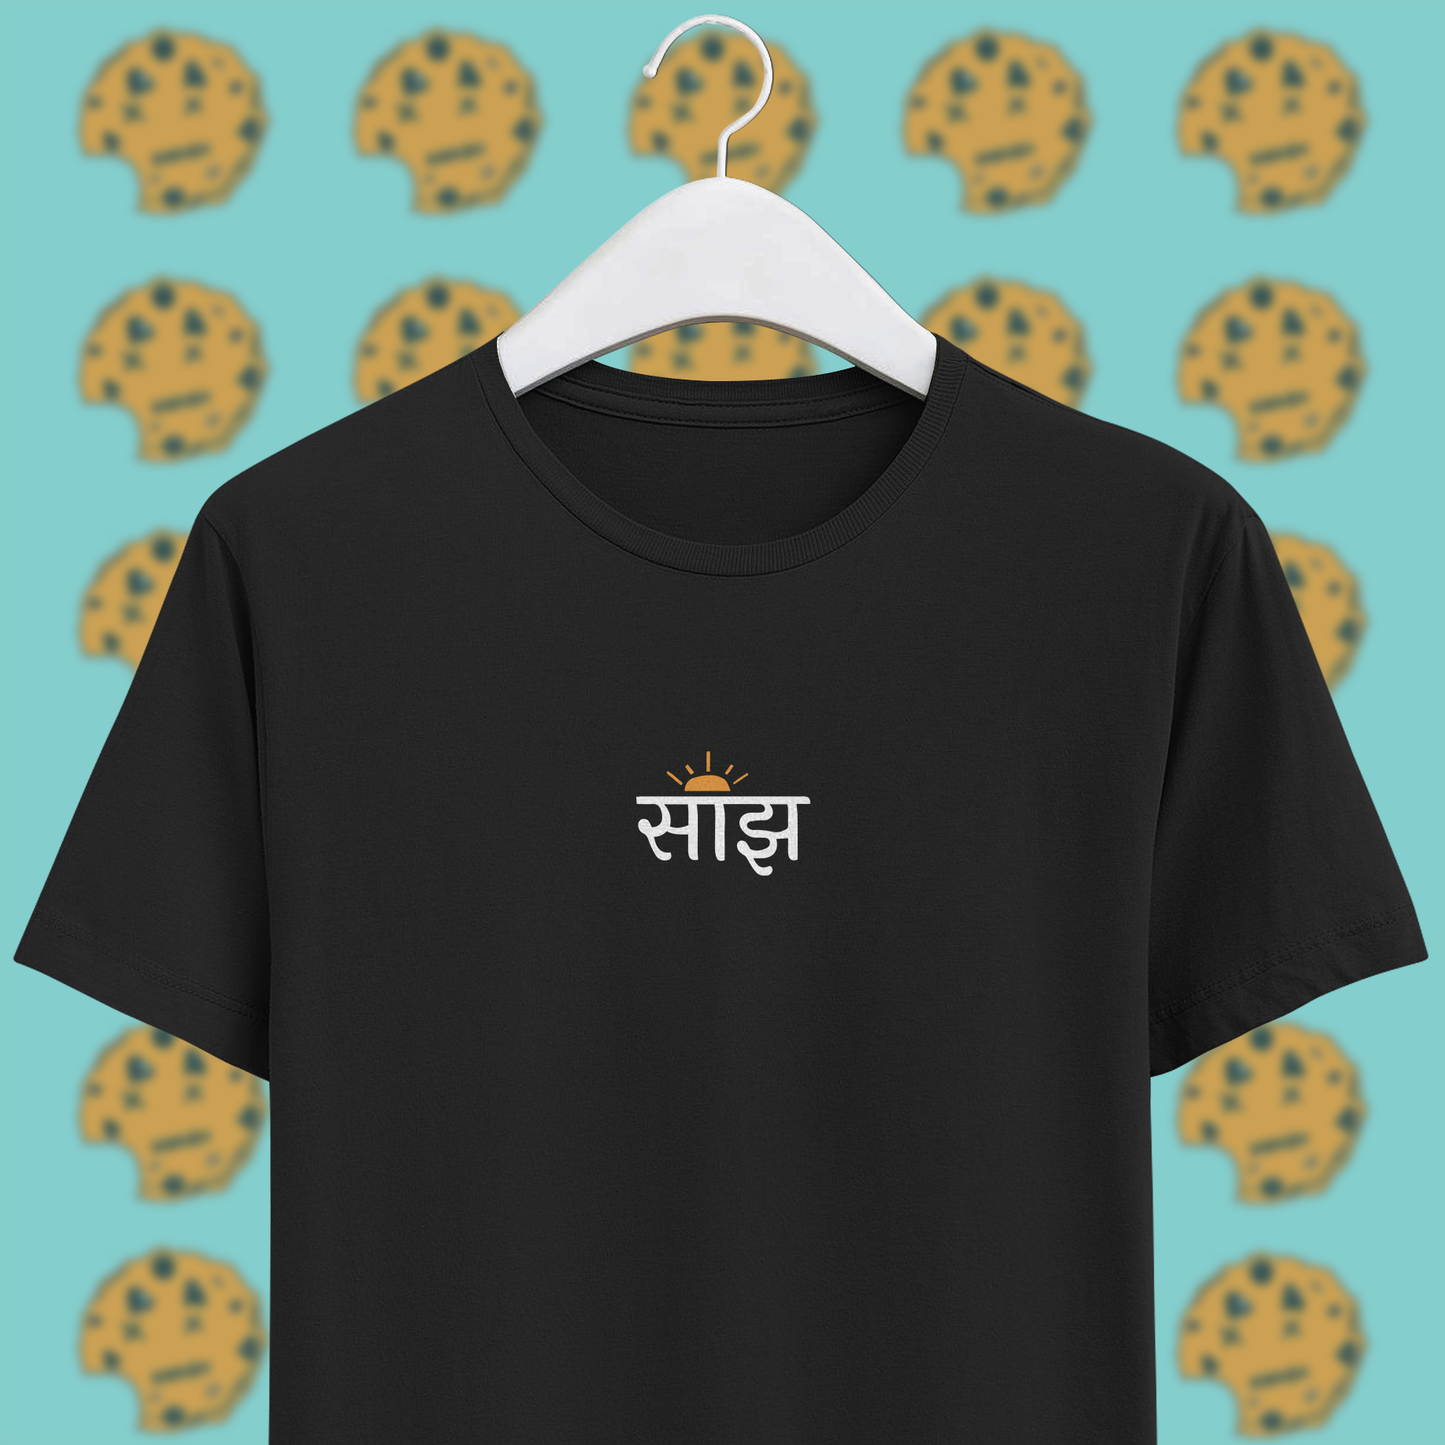 saanjh with setting sun hindi text on black unisex t-shirt on hanger.